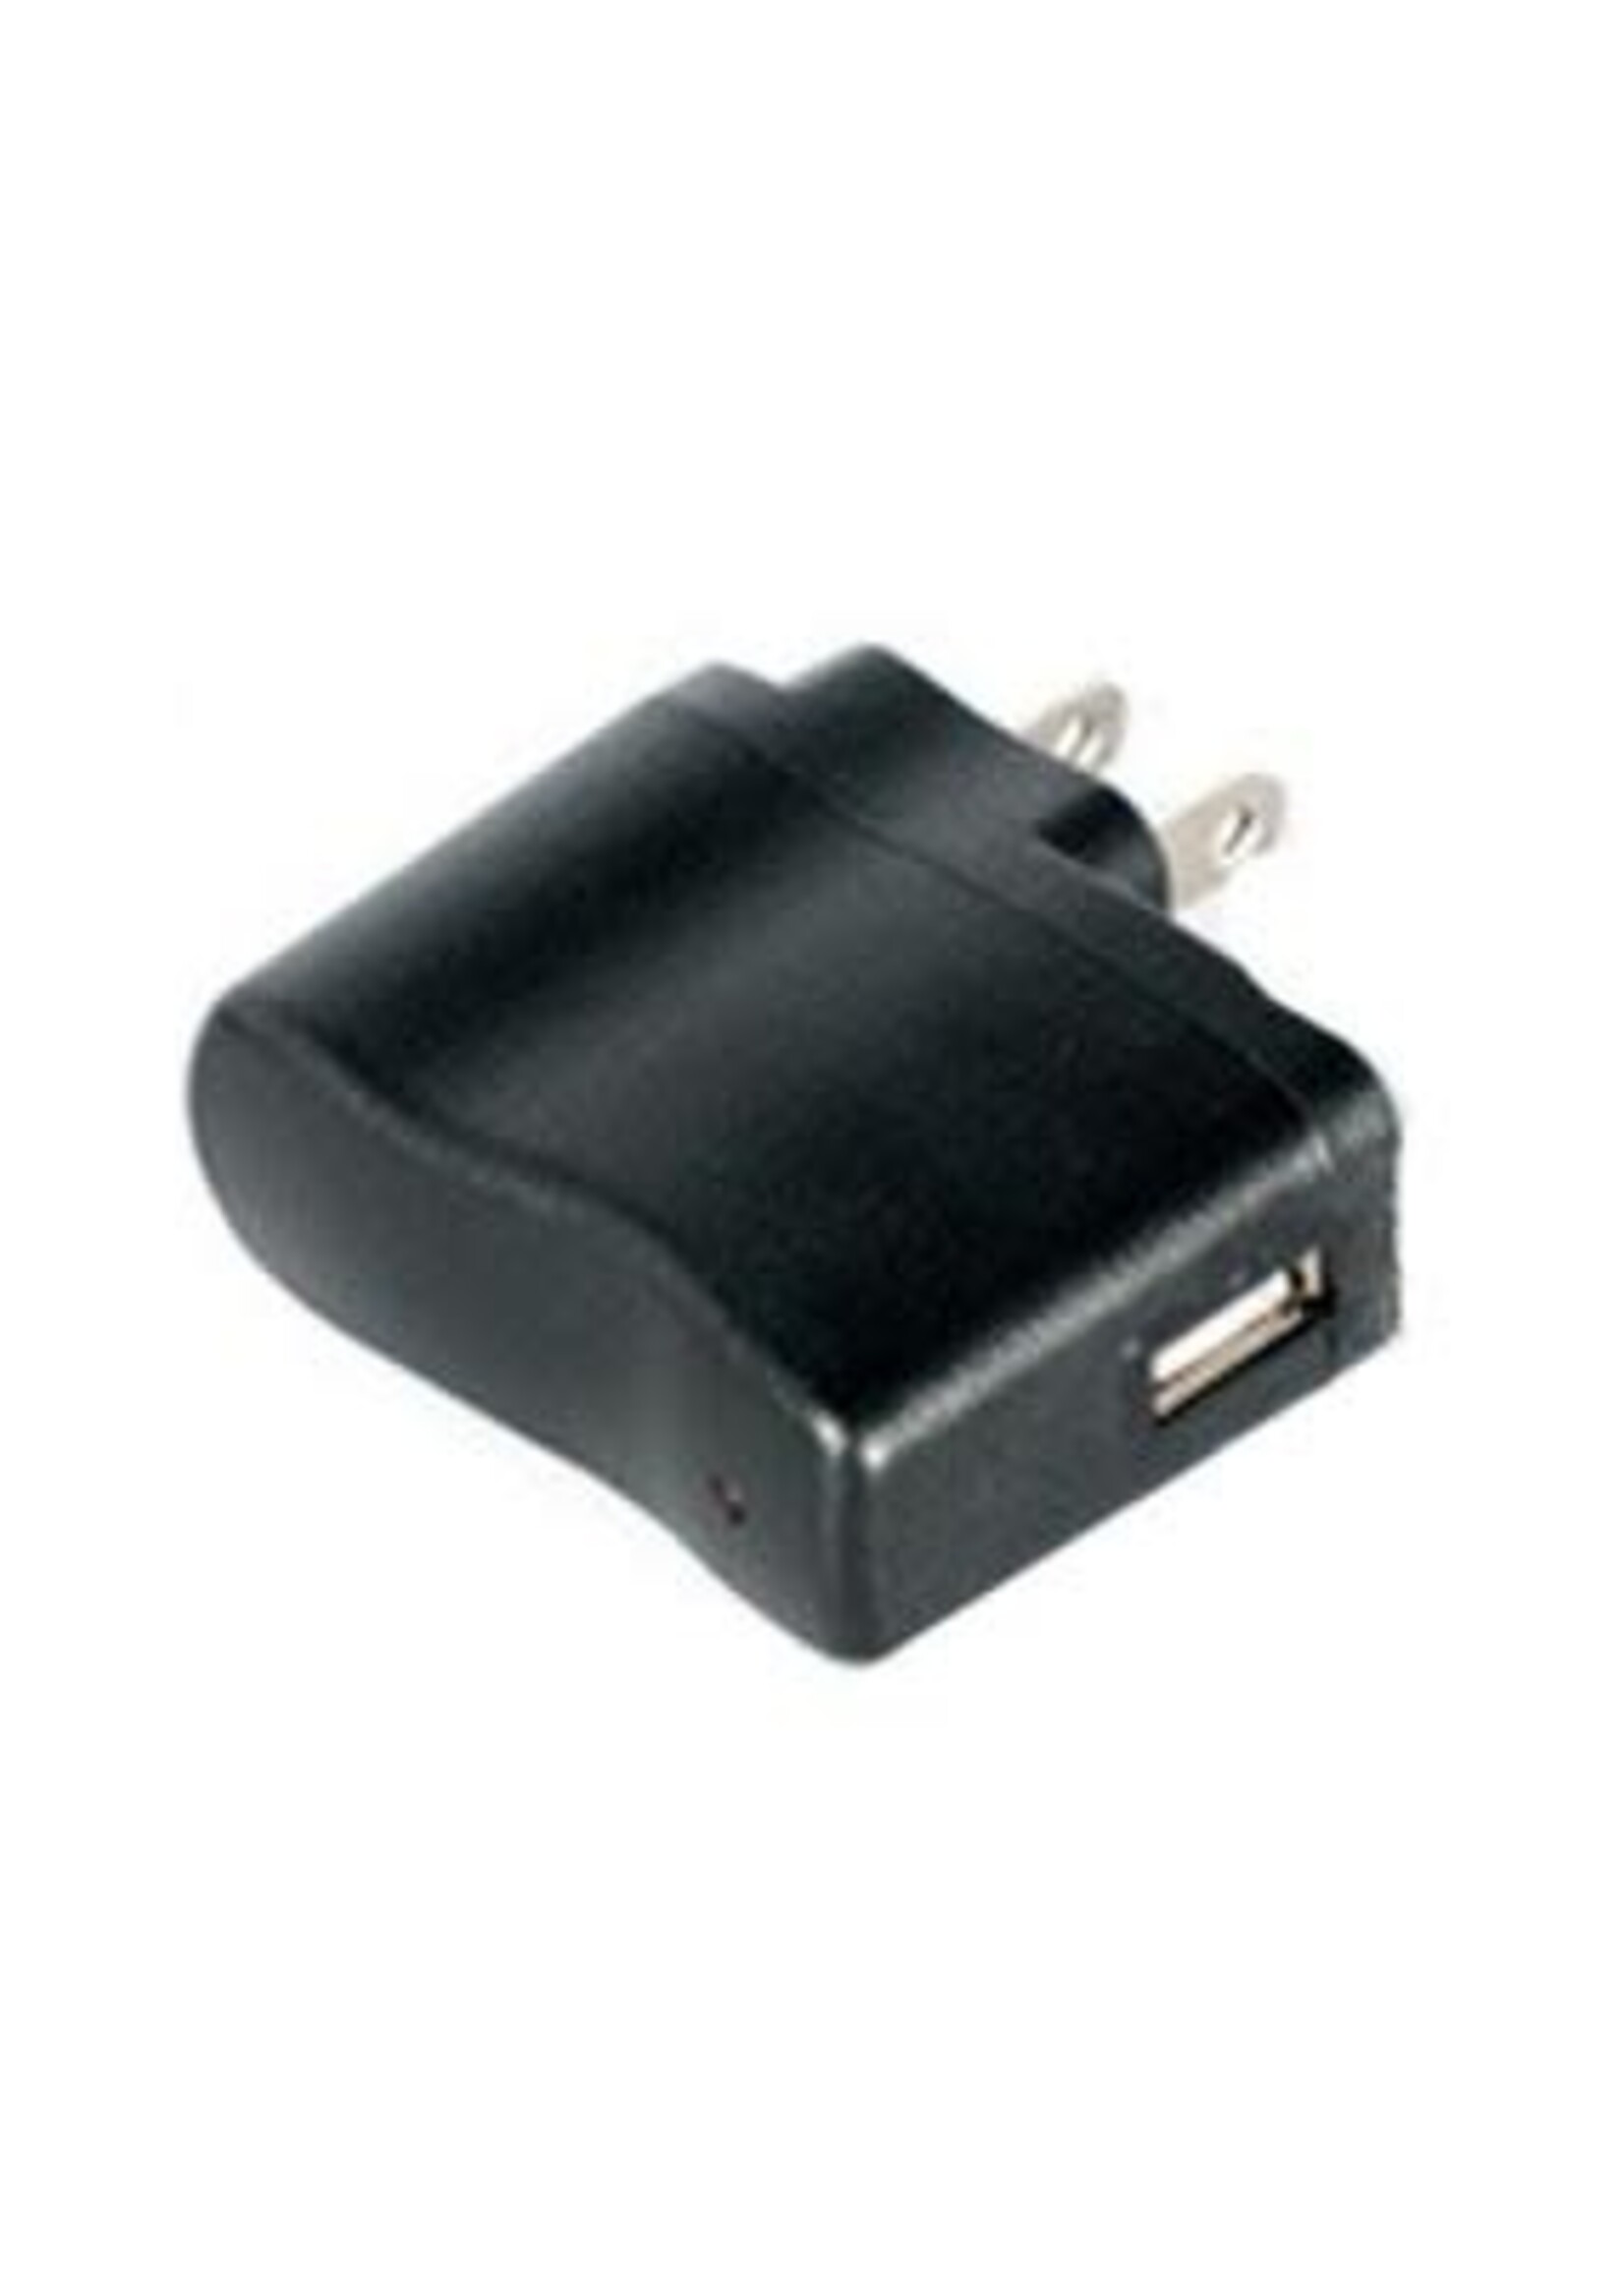 USB 5V 2.0A WALL ADAPTER